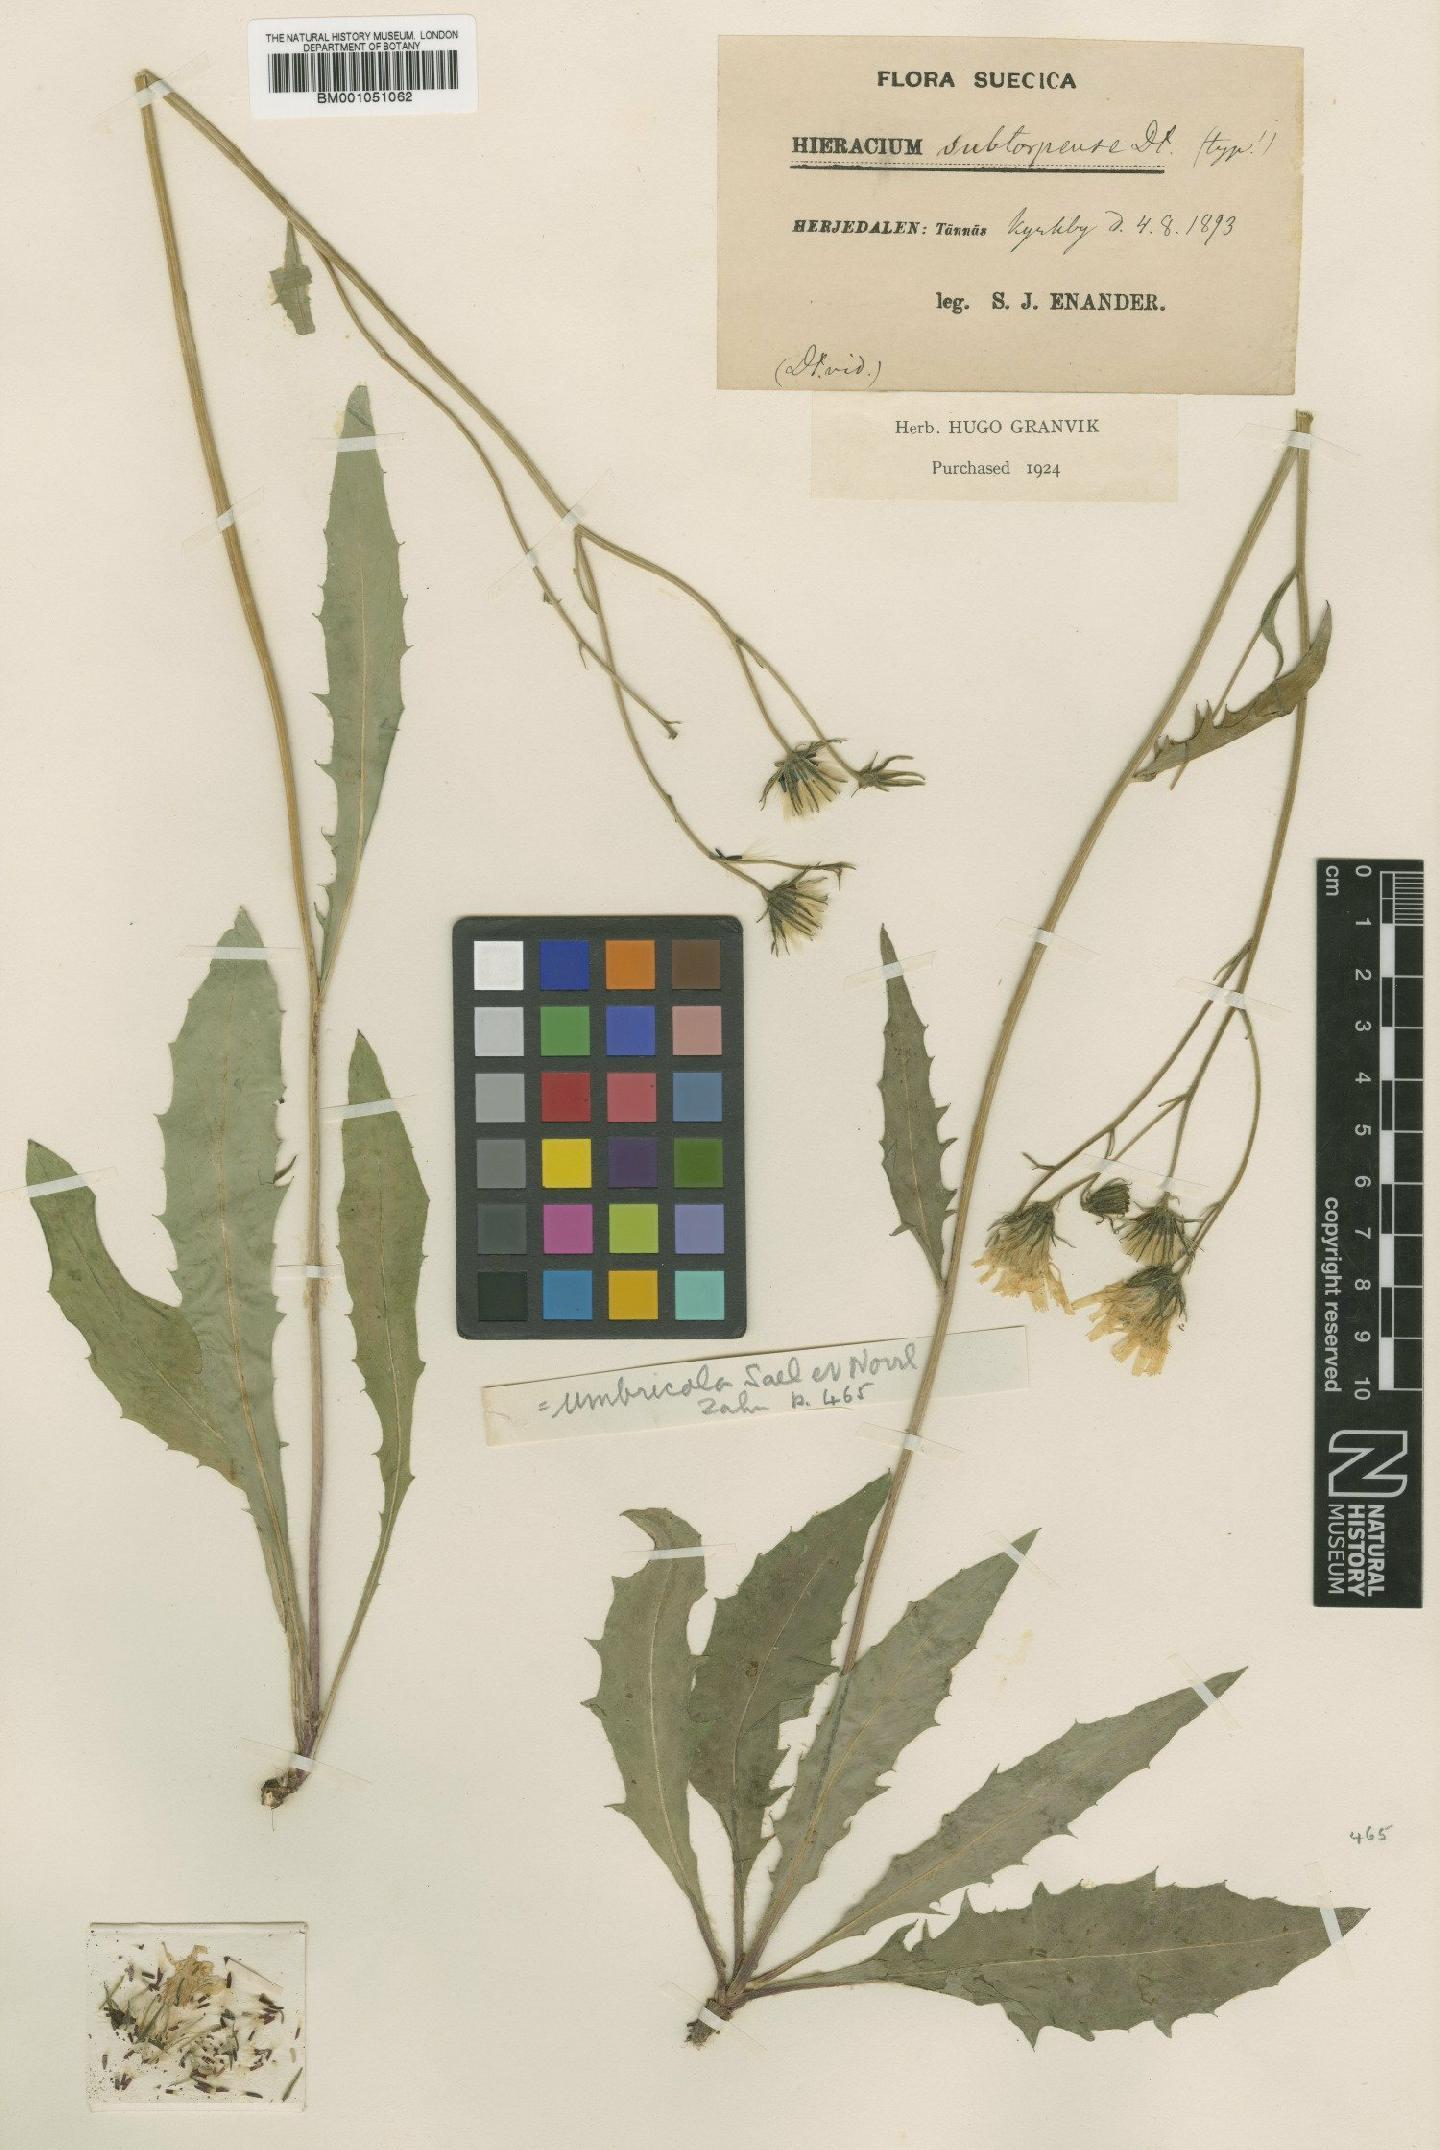 To NHMUK collection (Hieracium subramosum subsp. umbricola (Norrl.) Zahn; TYPE; NHMUK:ecatalogue:2420969)